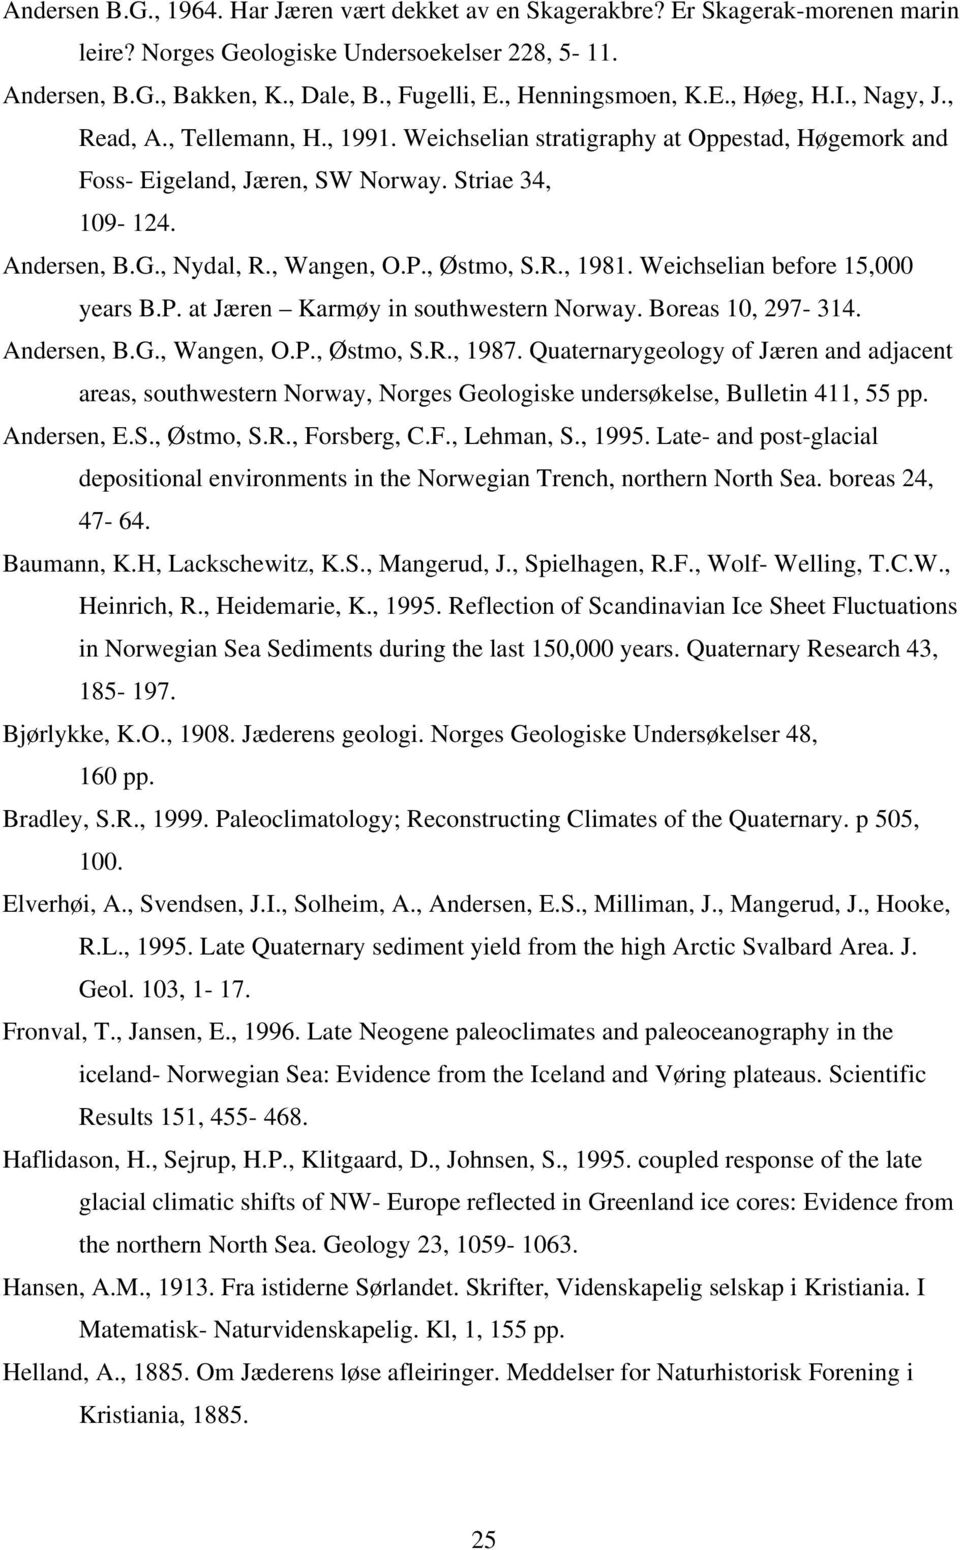 , Nydal, R., Wangen, O.P., Østmo, S.R., 1981. Weichselian before 15,000 years B.P. at Jæren Karmøy in southwestern Norway. Boreas 10, 297-314. Andersen, B.G., Wangen, O.P., Østmo, S.R., 1987.